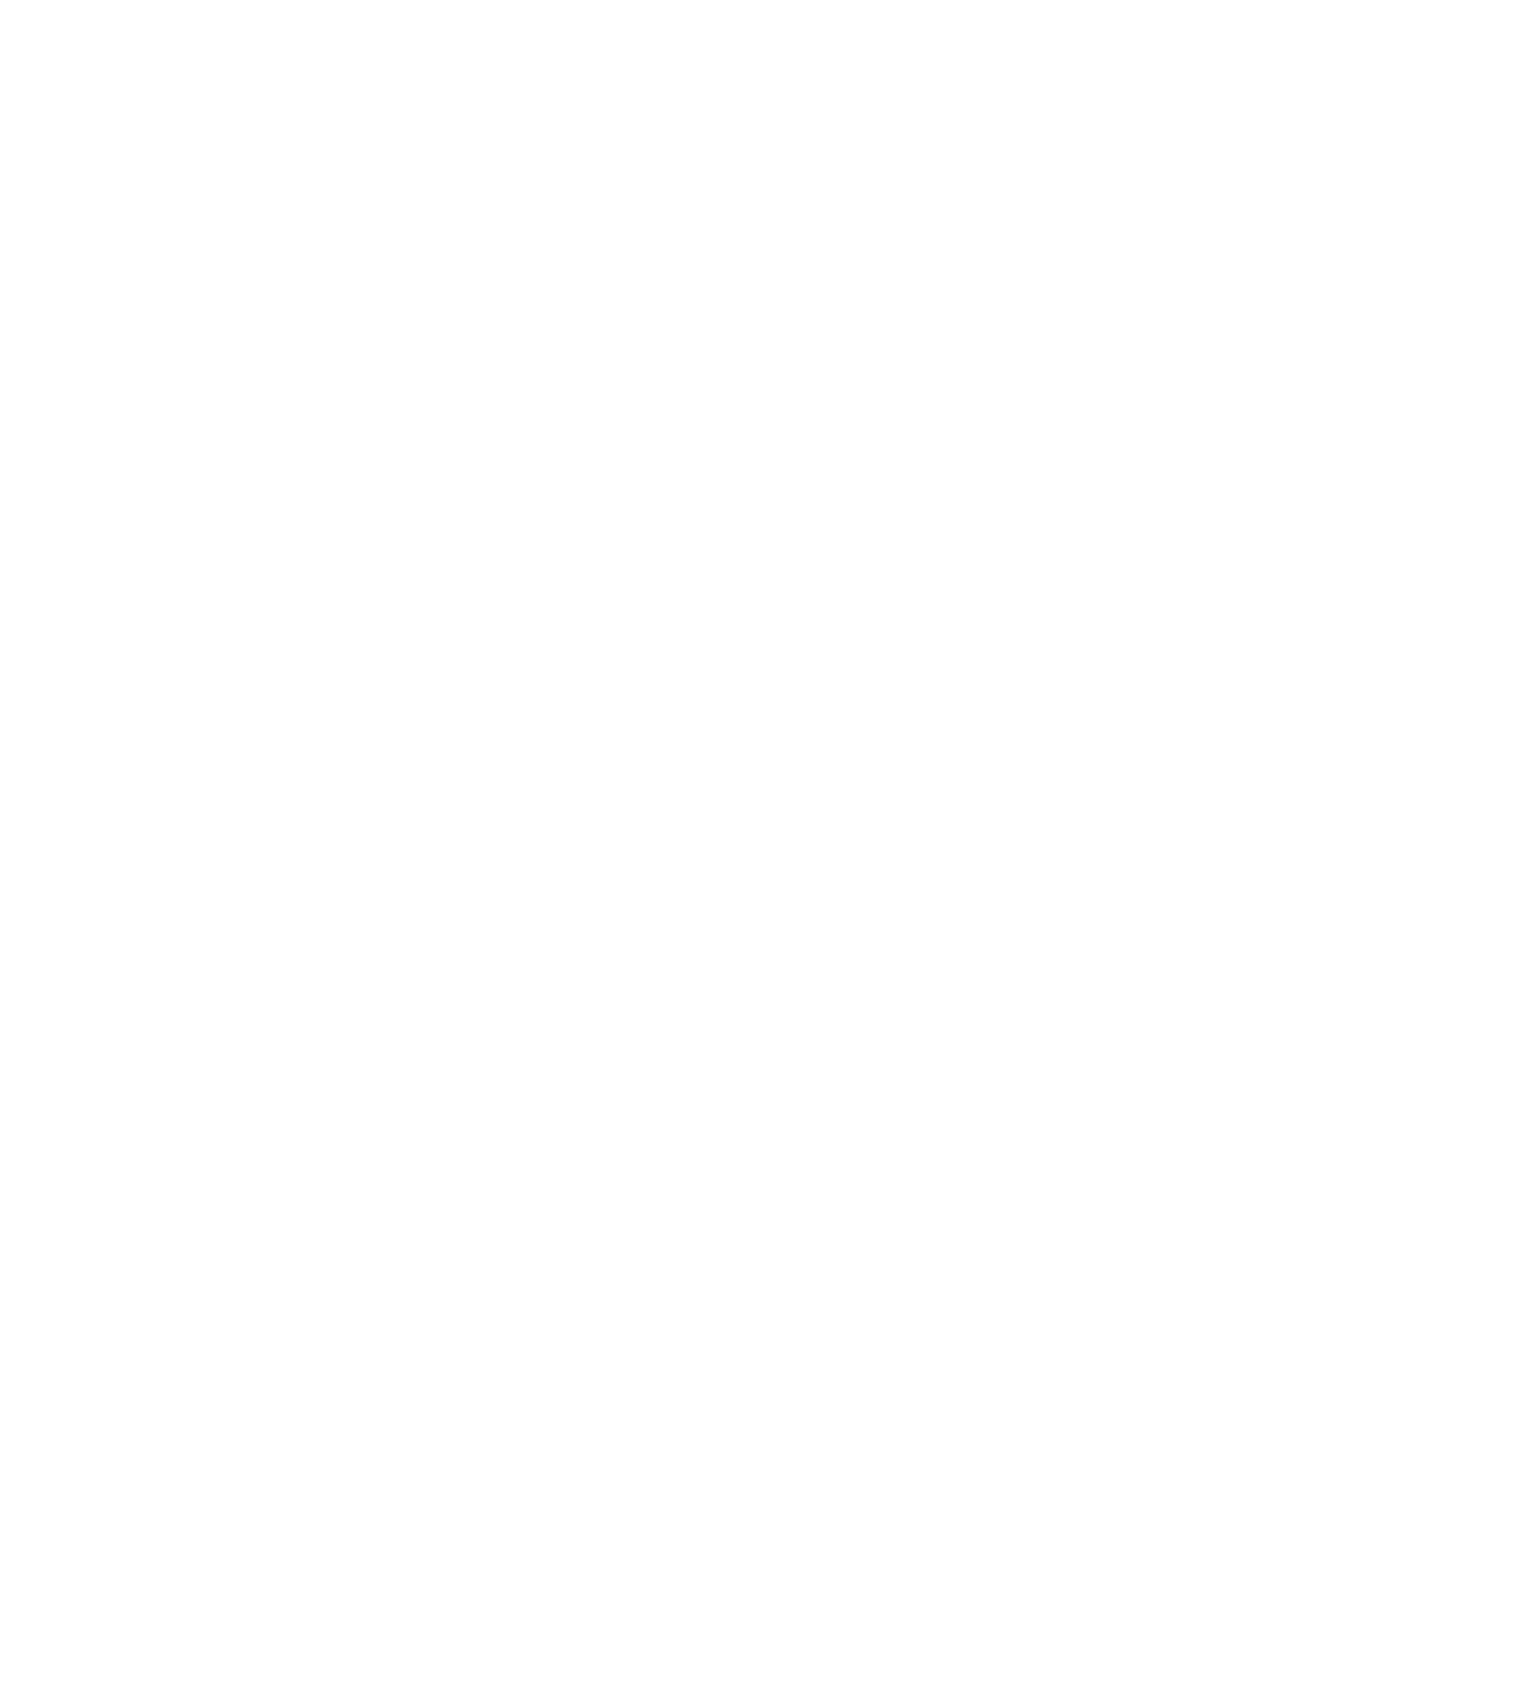 X studio Home Page